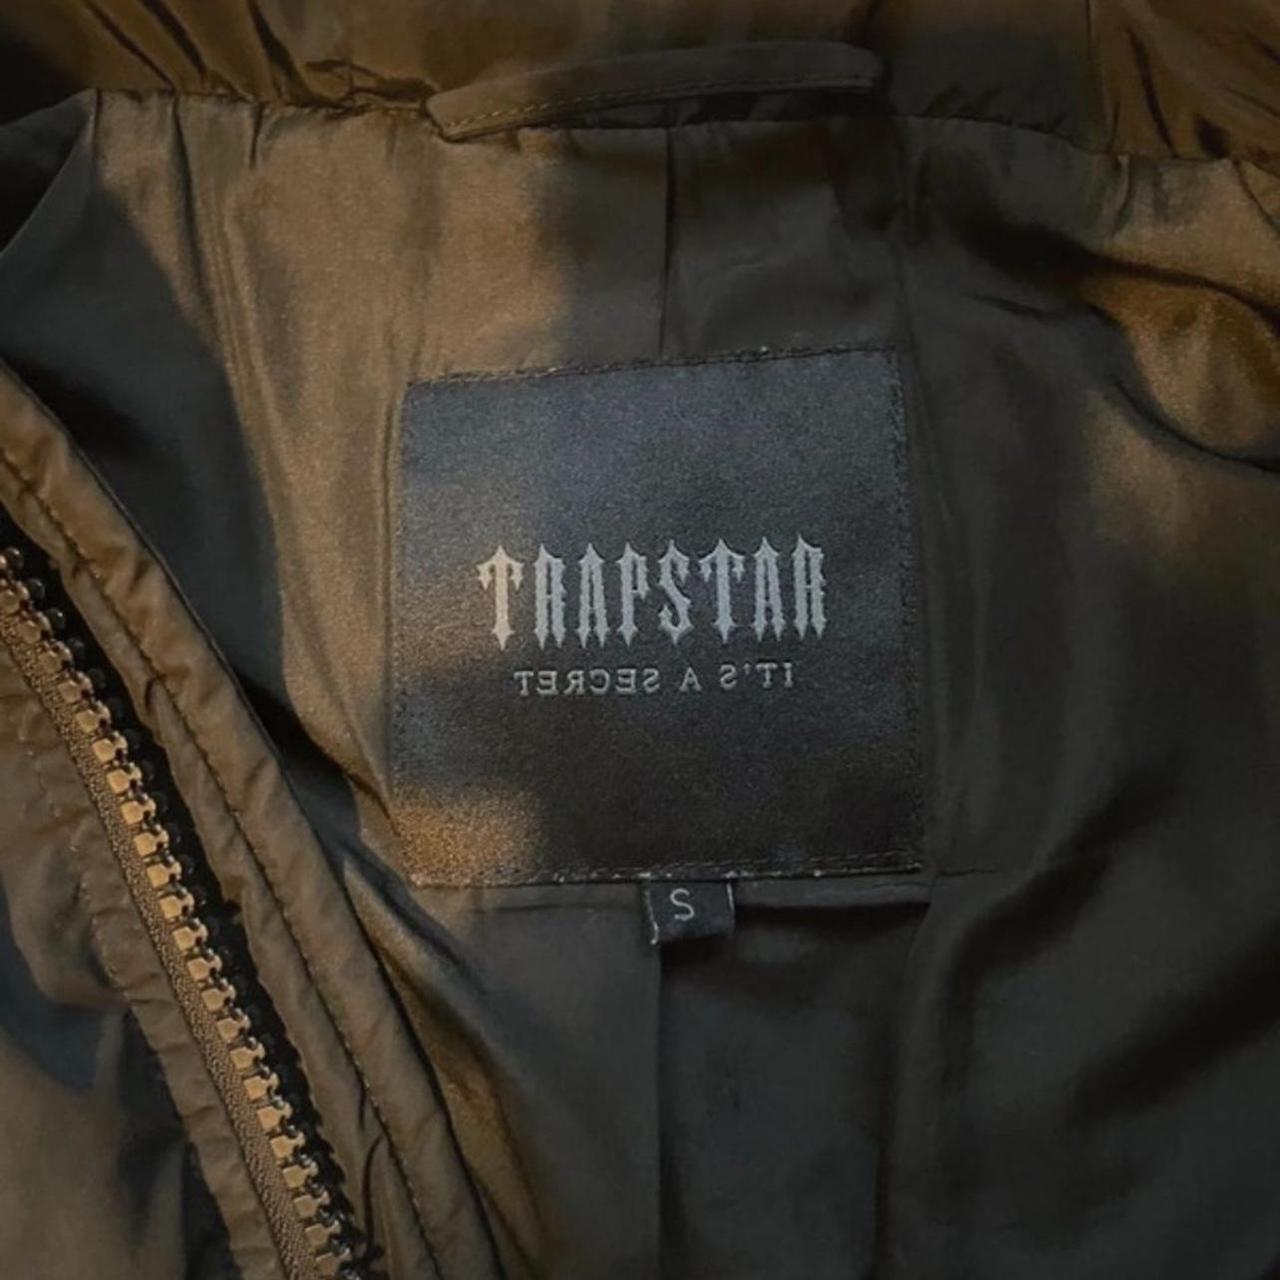 Trapstar jacket - Depop